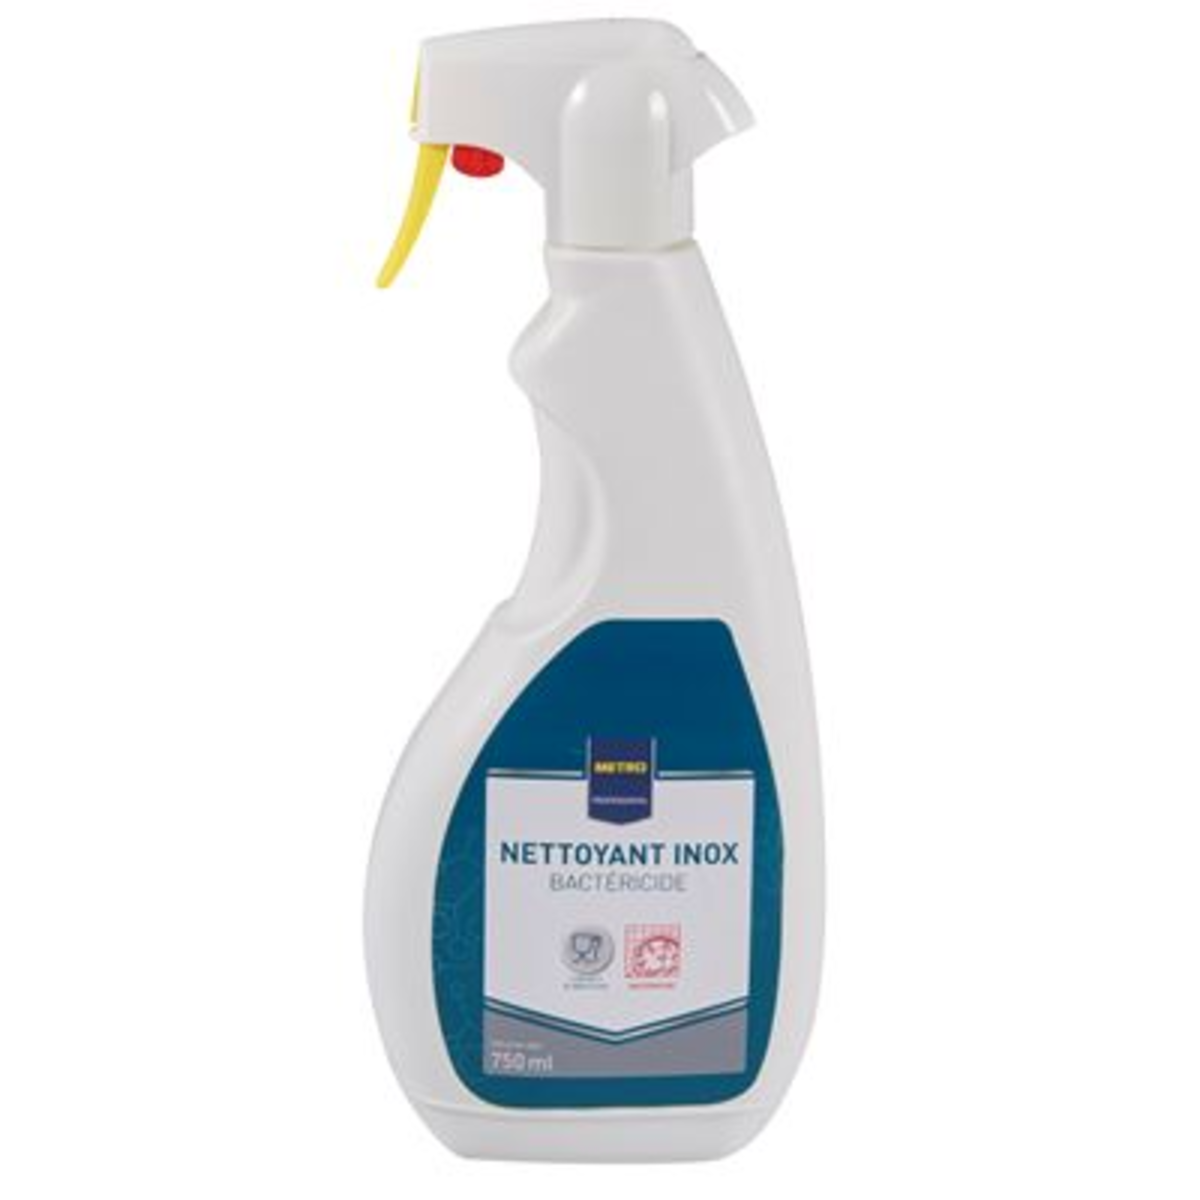 Nettoyant inox bactéricide 750 ml